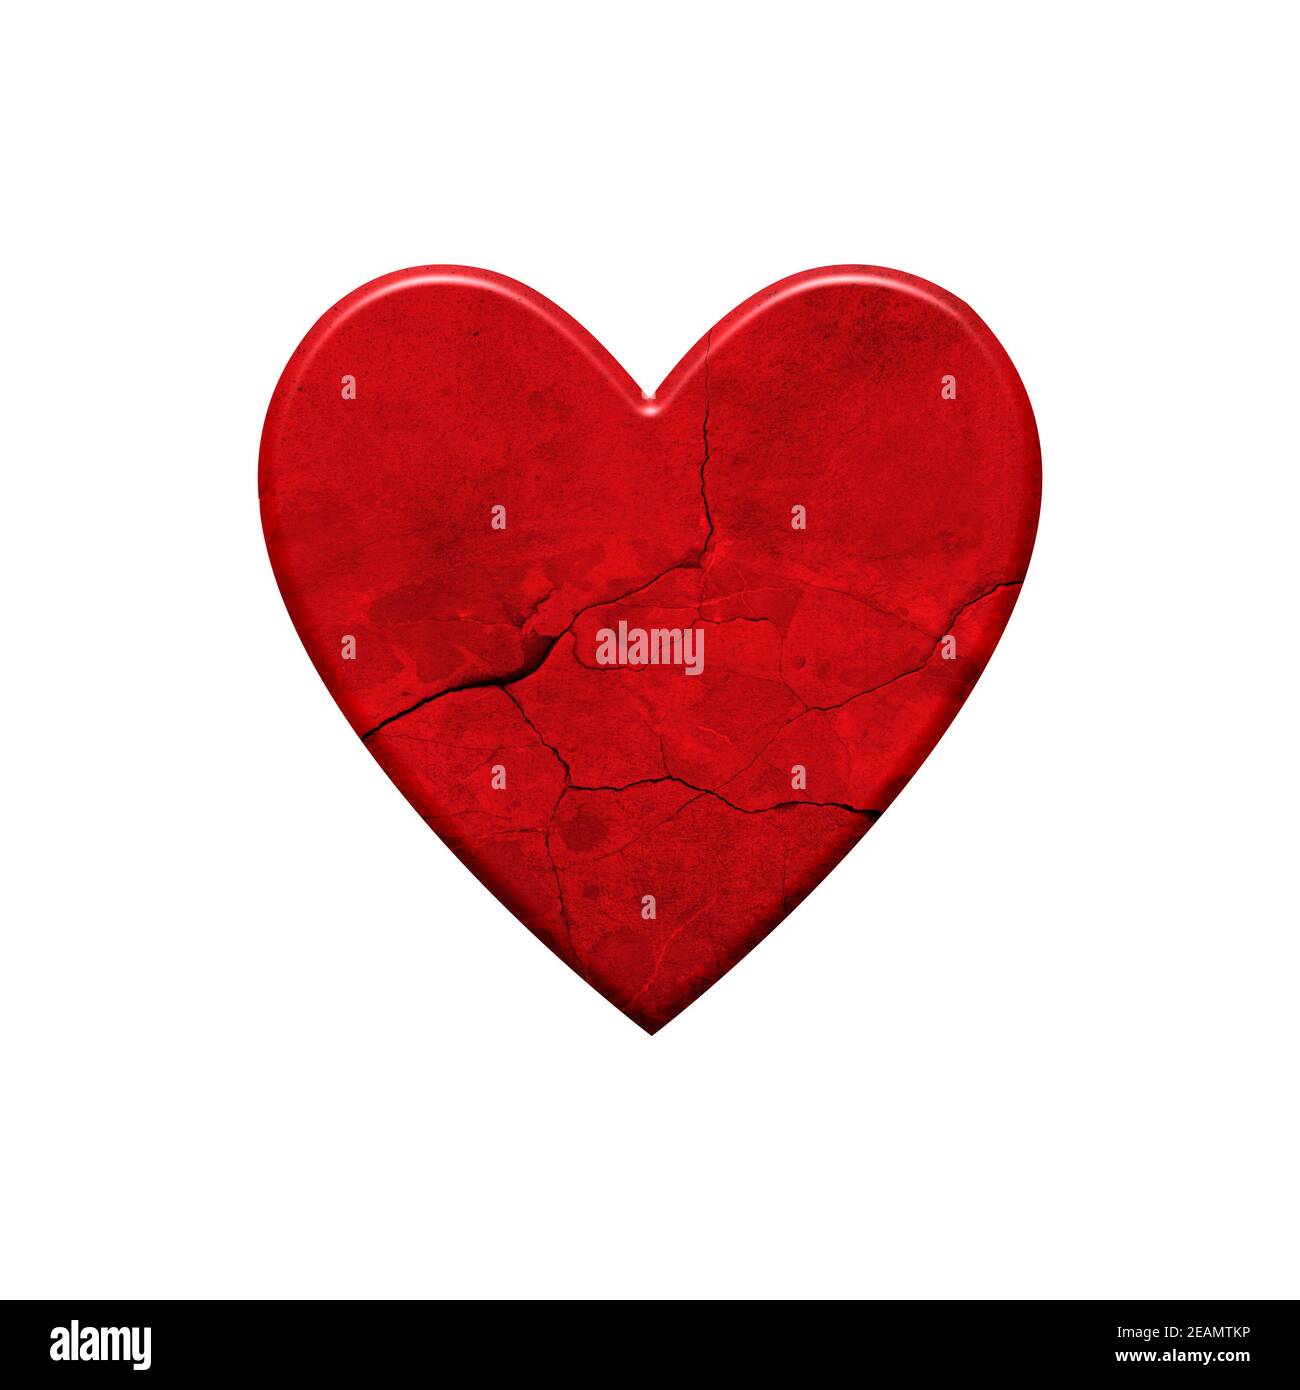 Lovesickness - Red broken Heart Stock Photo - Alamy